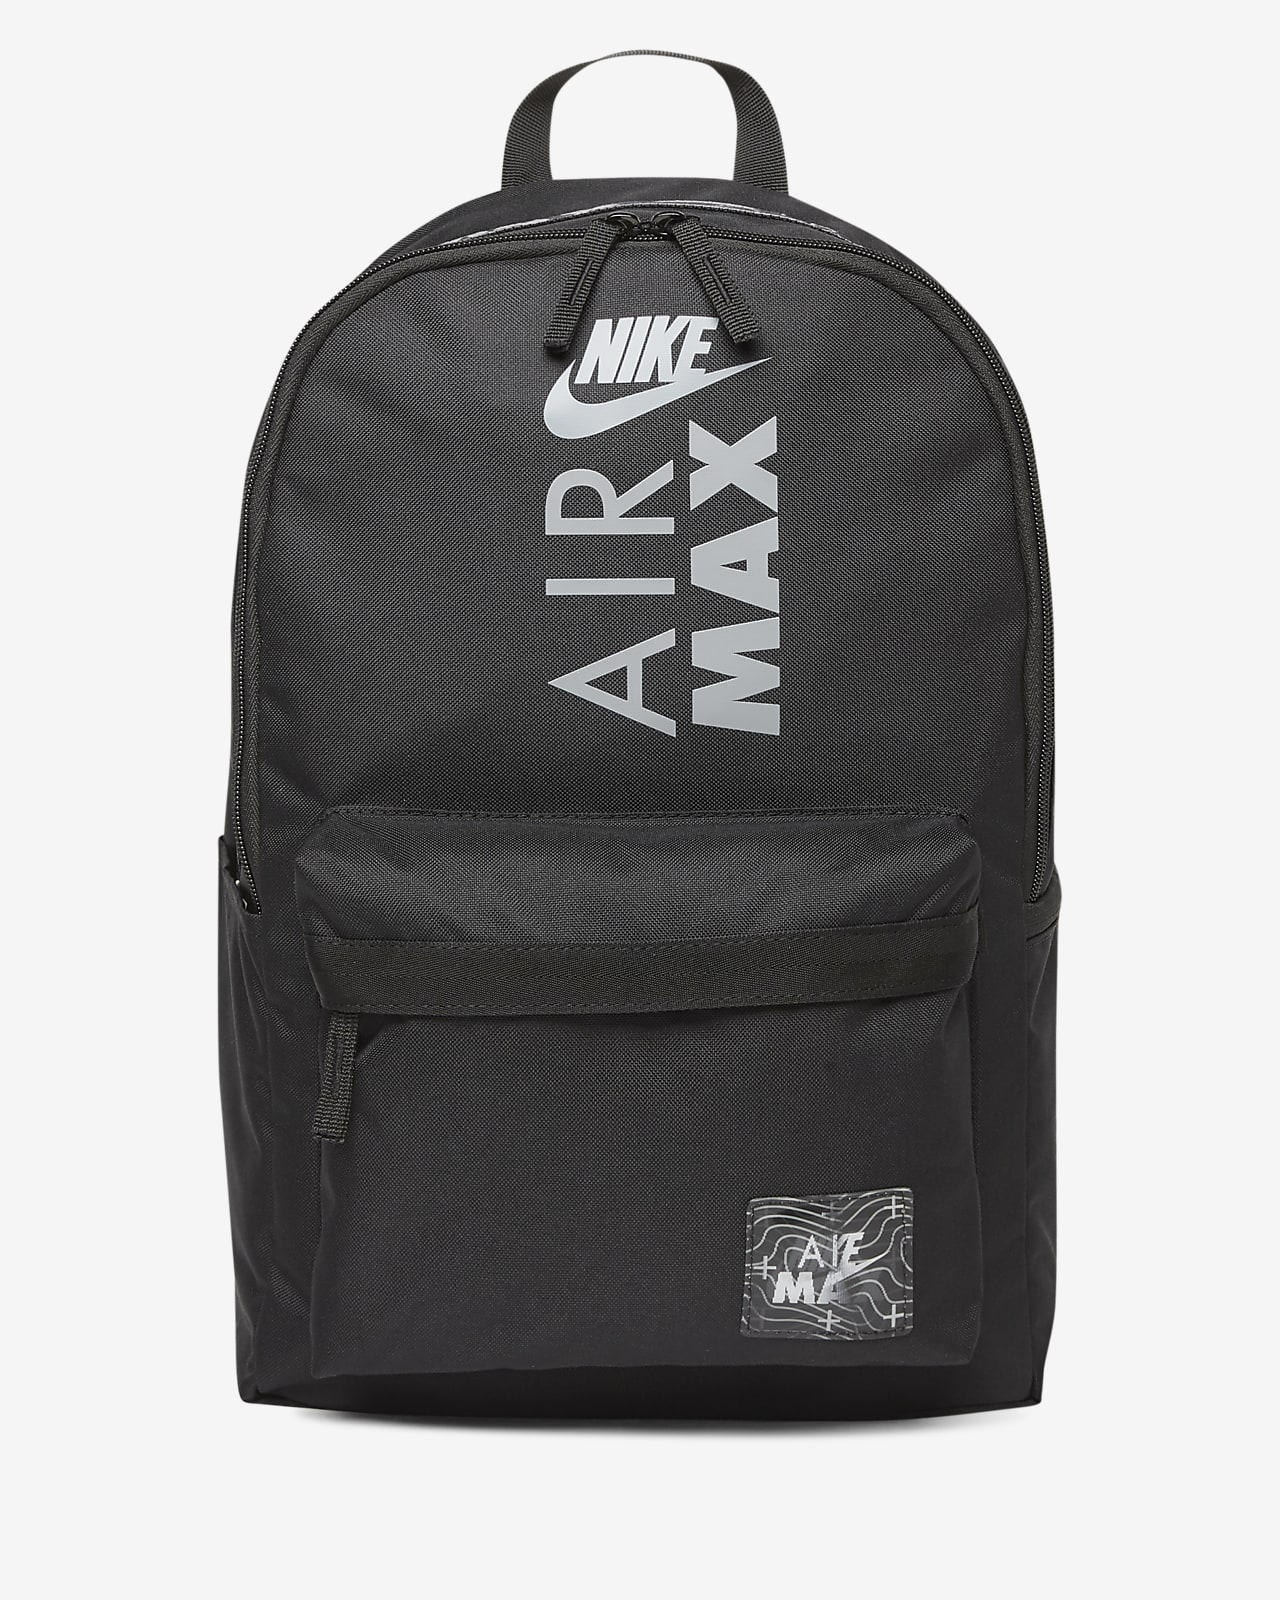 Nike Max Air Backpack GreyGreenBlack  Amazonin Bags Wallets and  Luggage